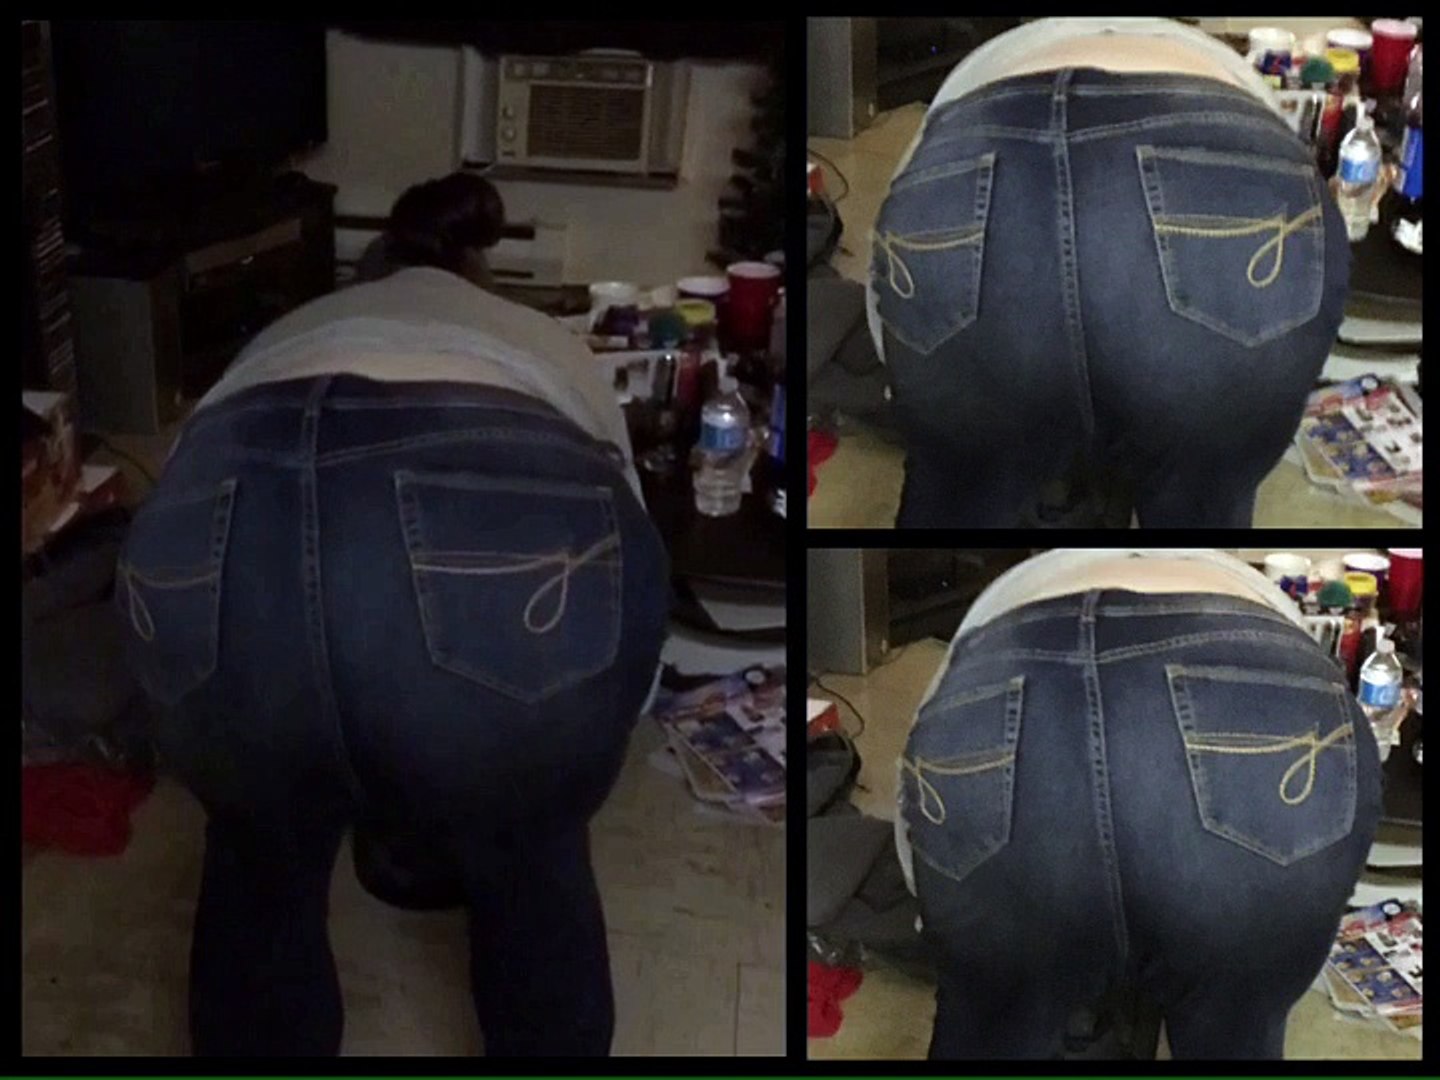 ass tight jeans hips